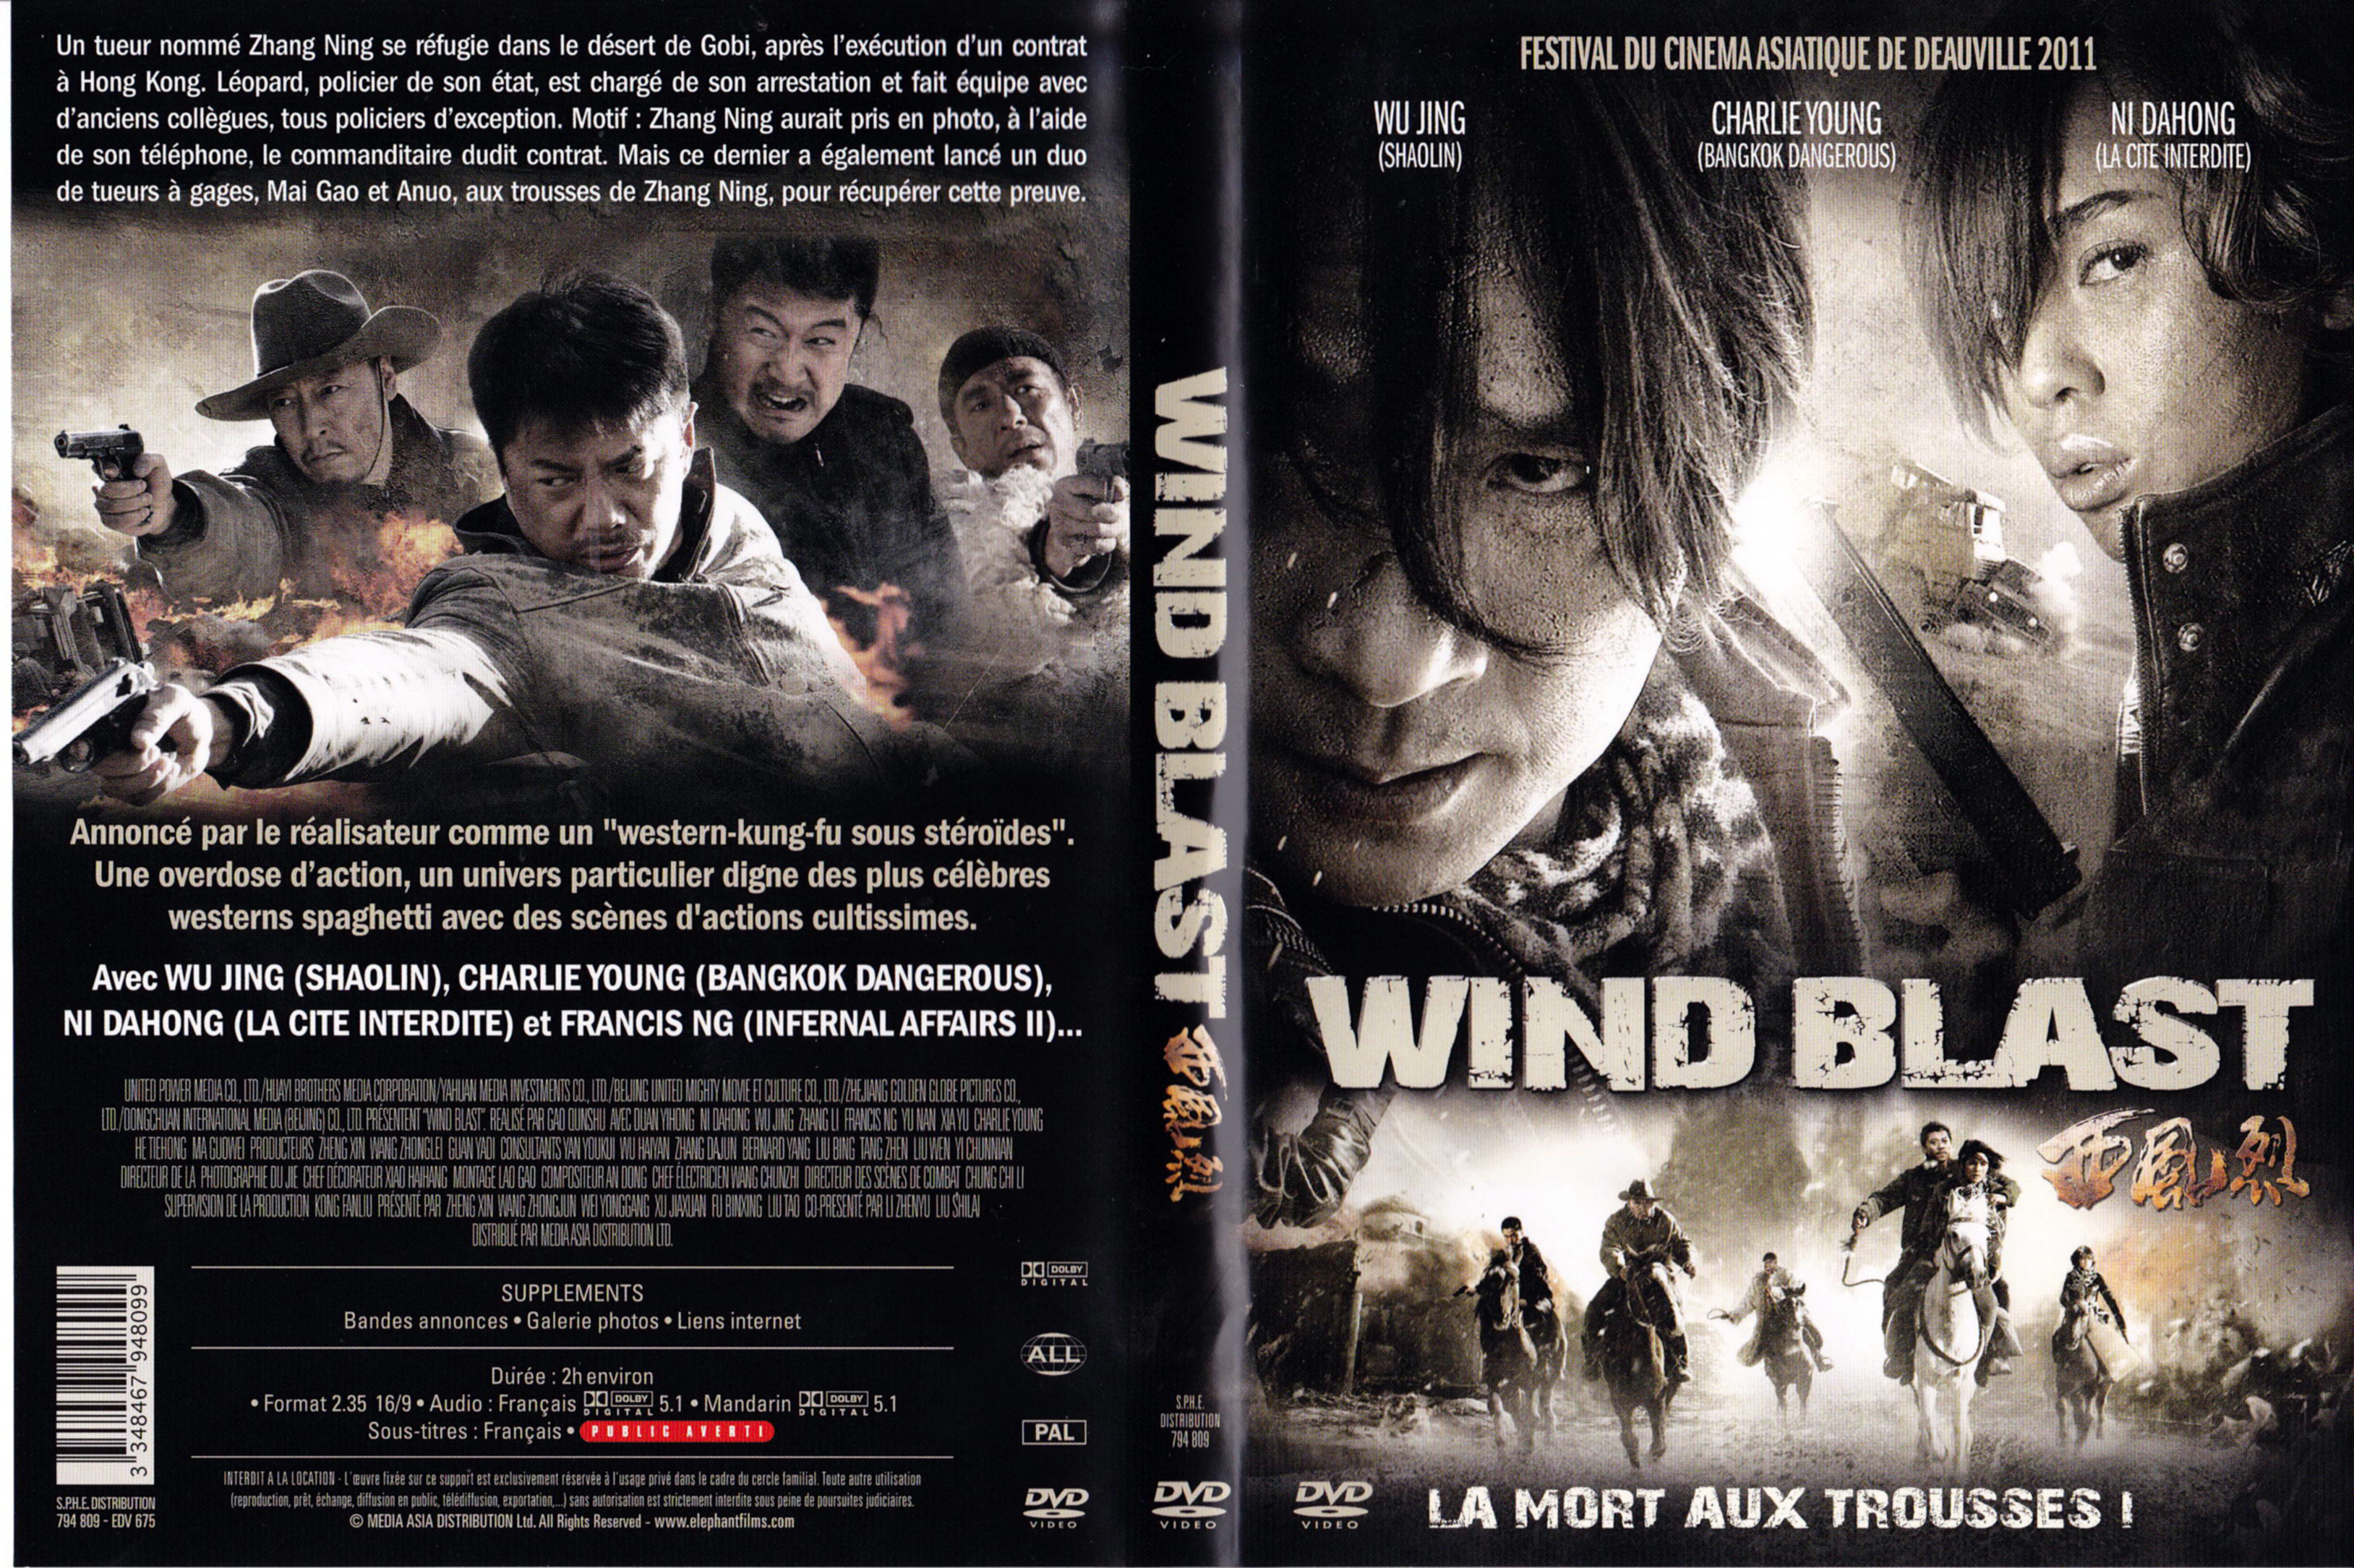 Jaquette DVD Wind blast